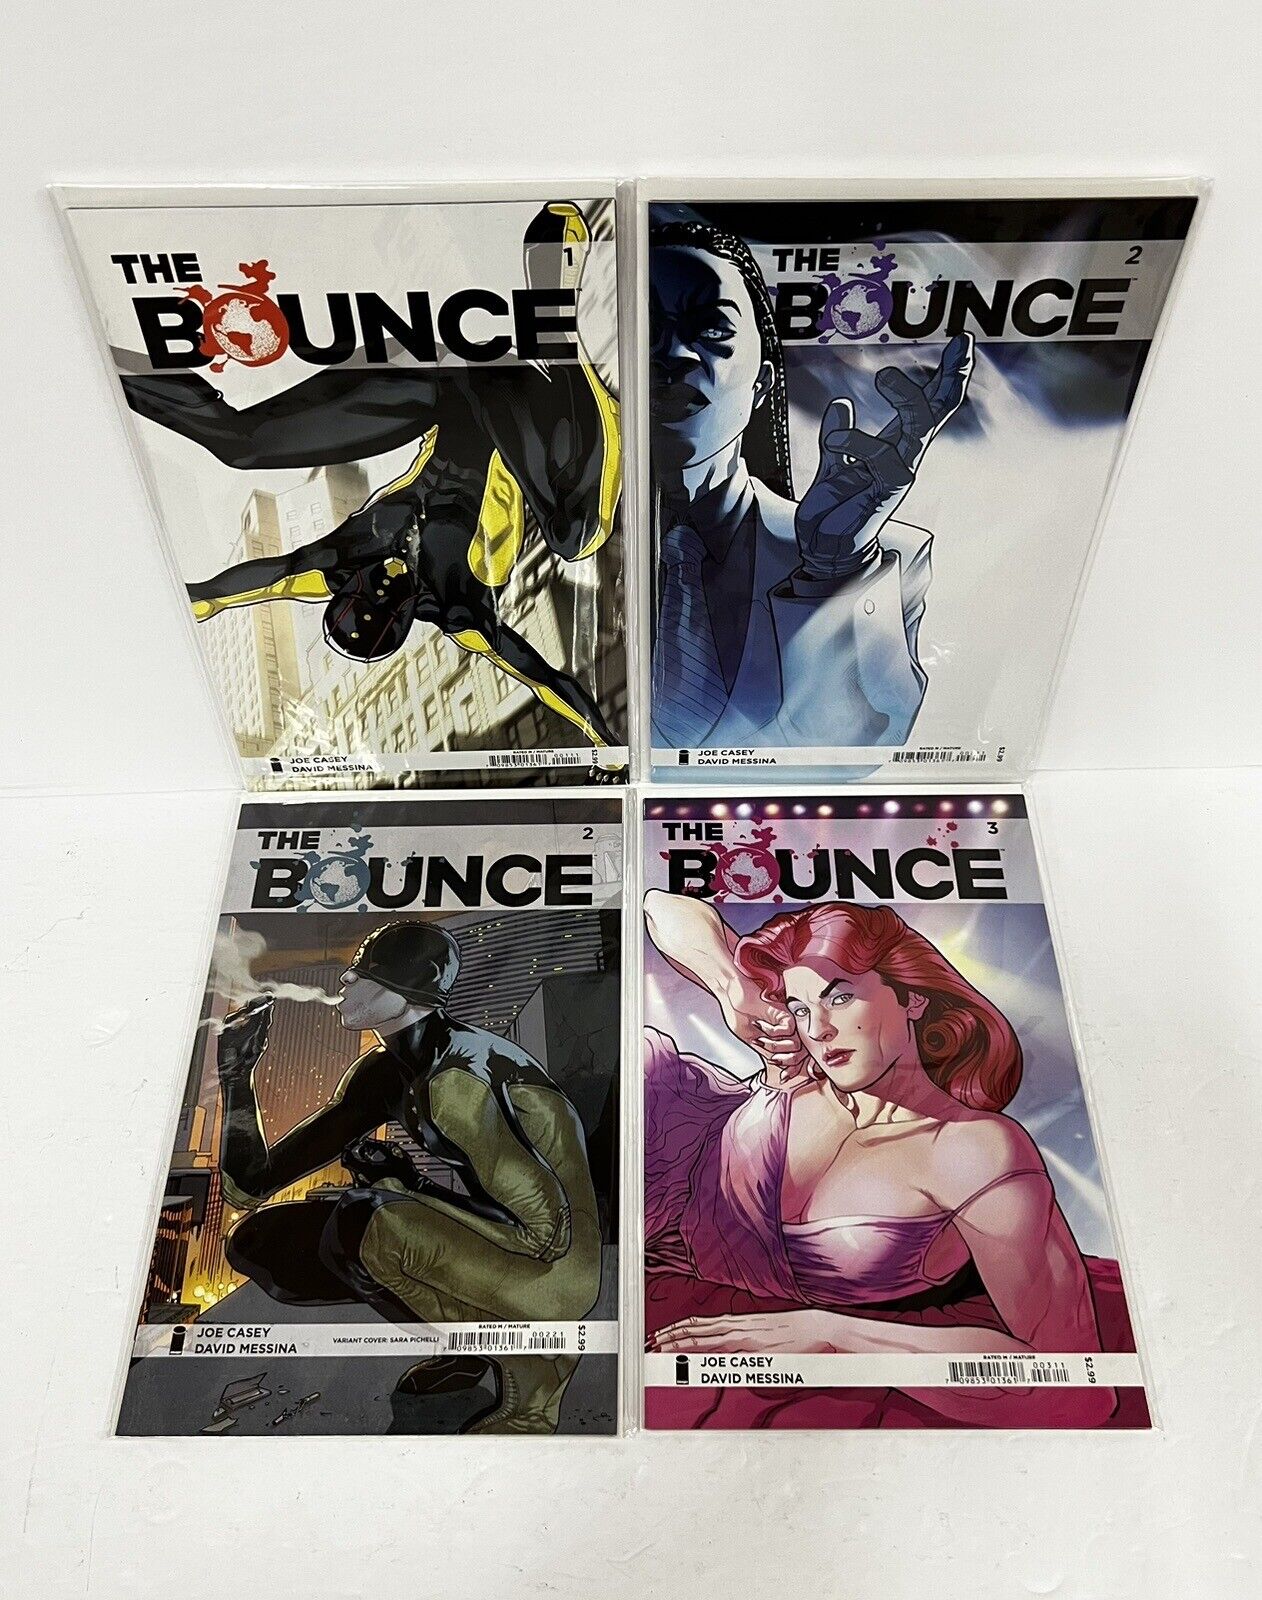 The Bounce #1-7, 2B Variant Image Comics Lot of 8 Comics Ships Immediately